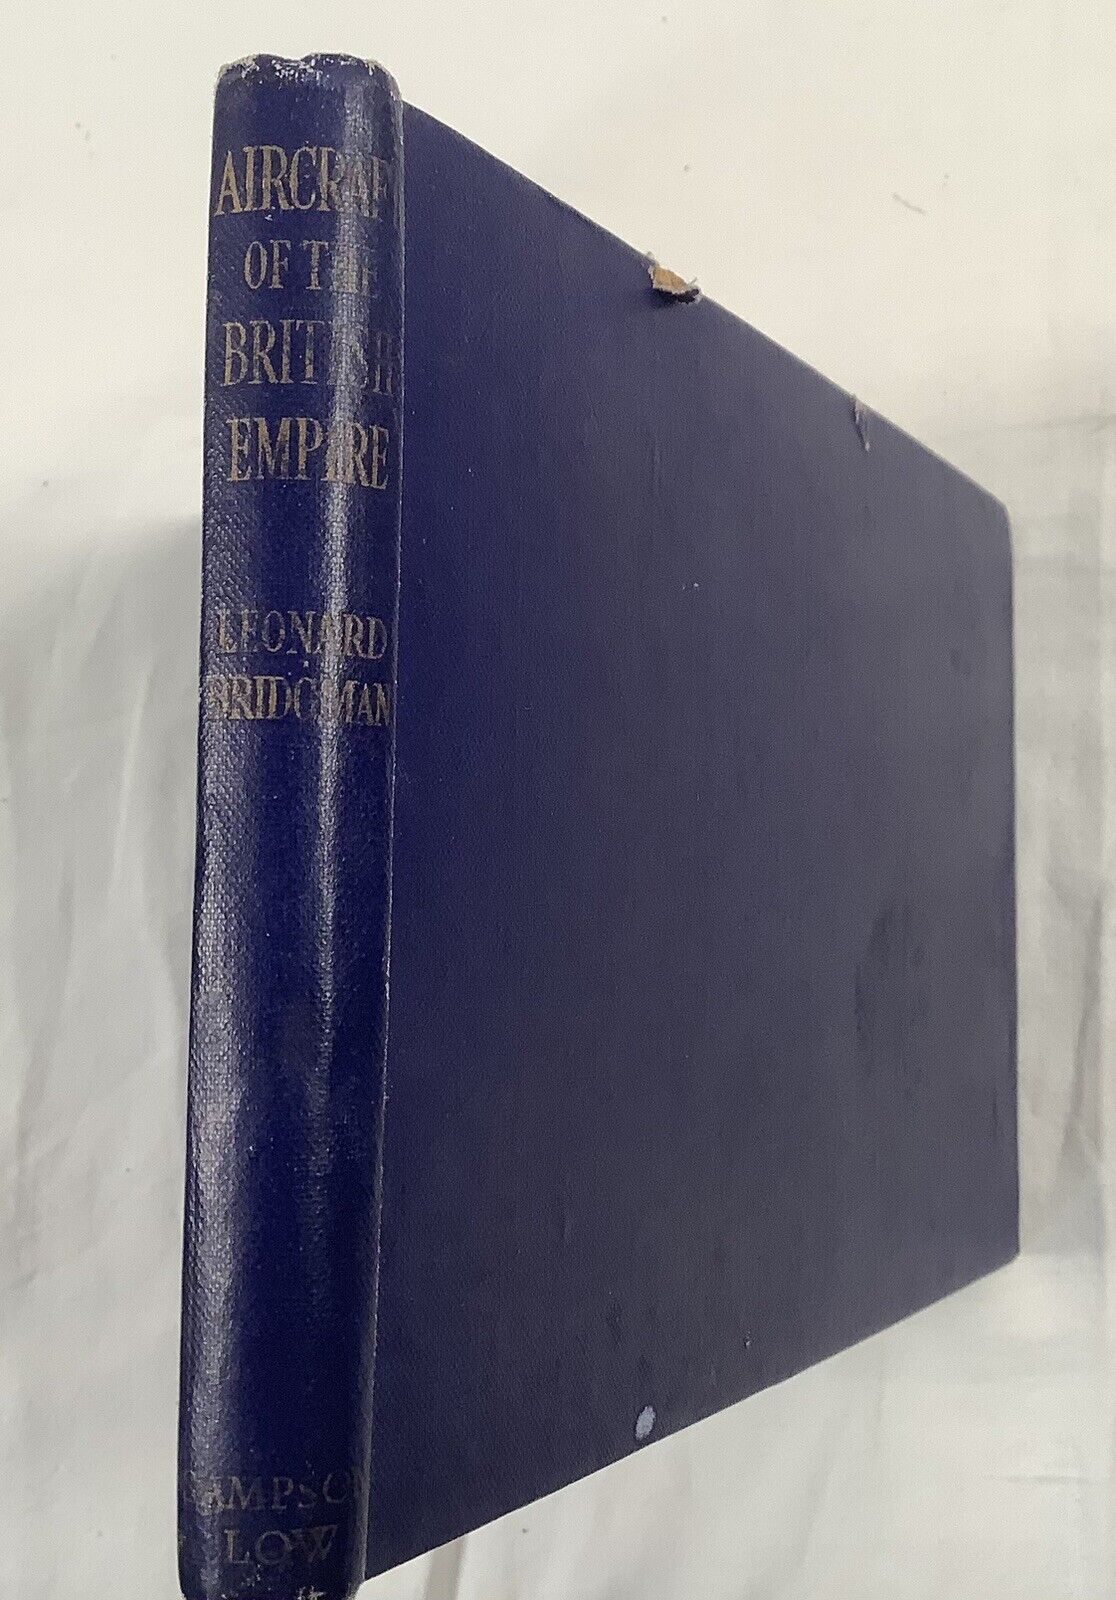 AIRCRAFT OF THE BRITISH EMPIRE 1940 5th Edition Antique Book By Leonard Bridgman